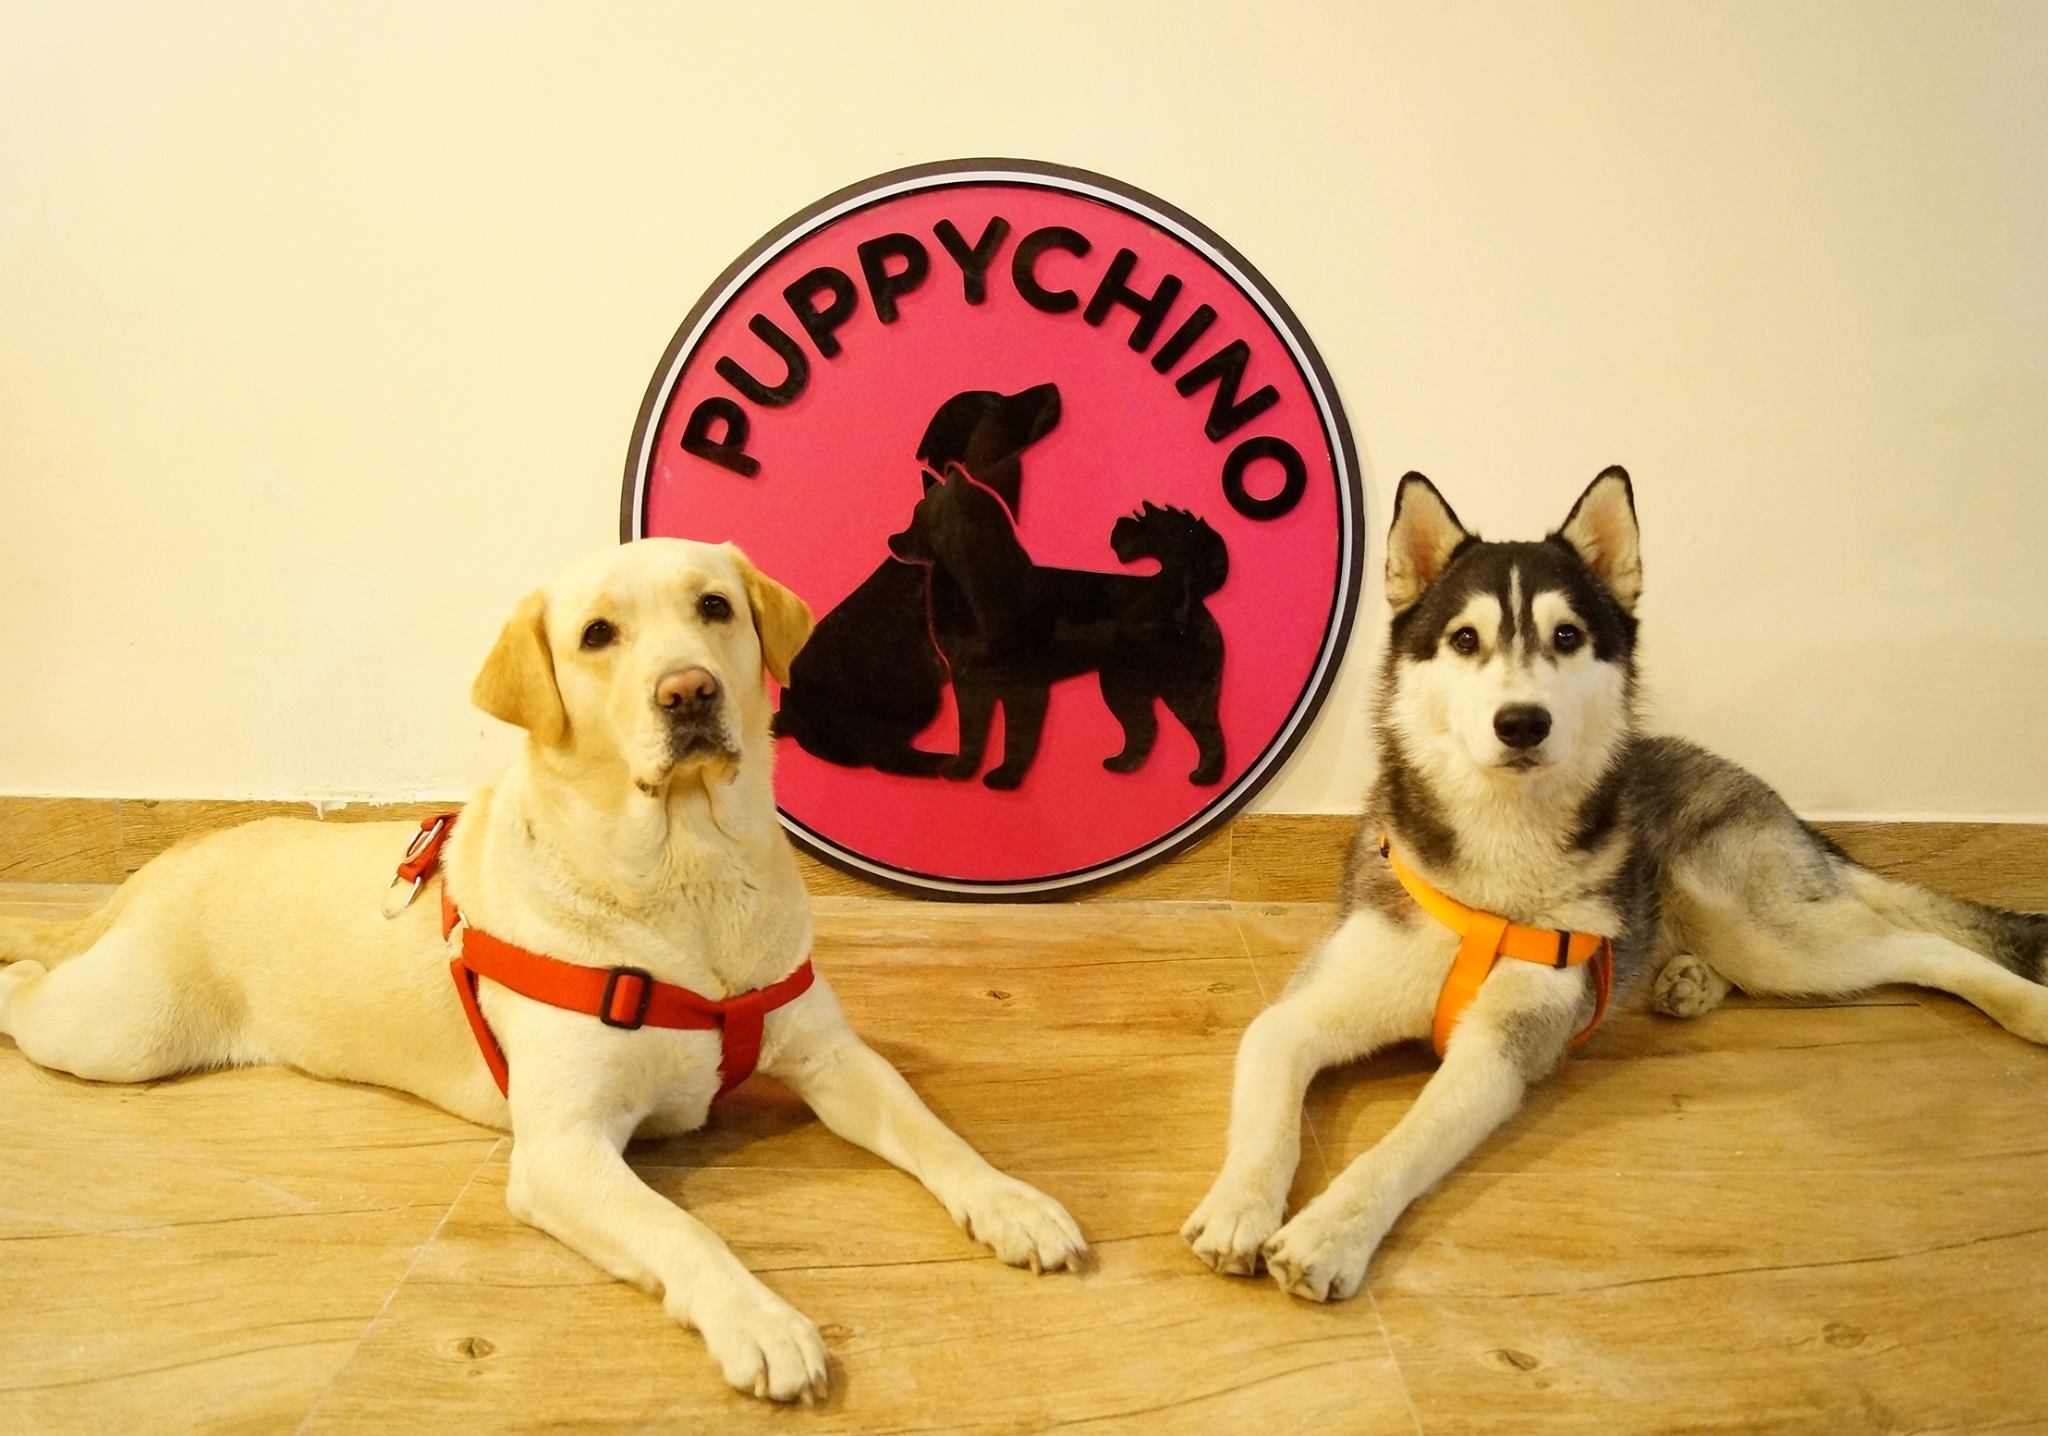 puppychino dog cafe new delhi